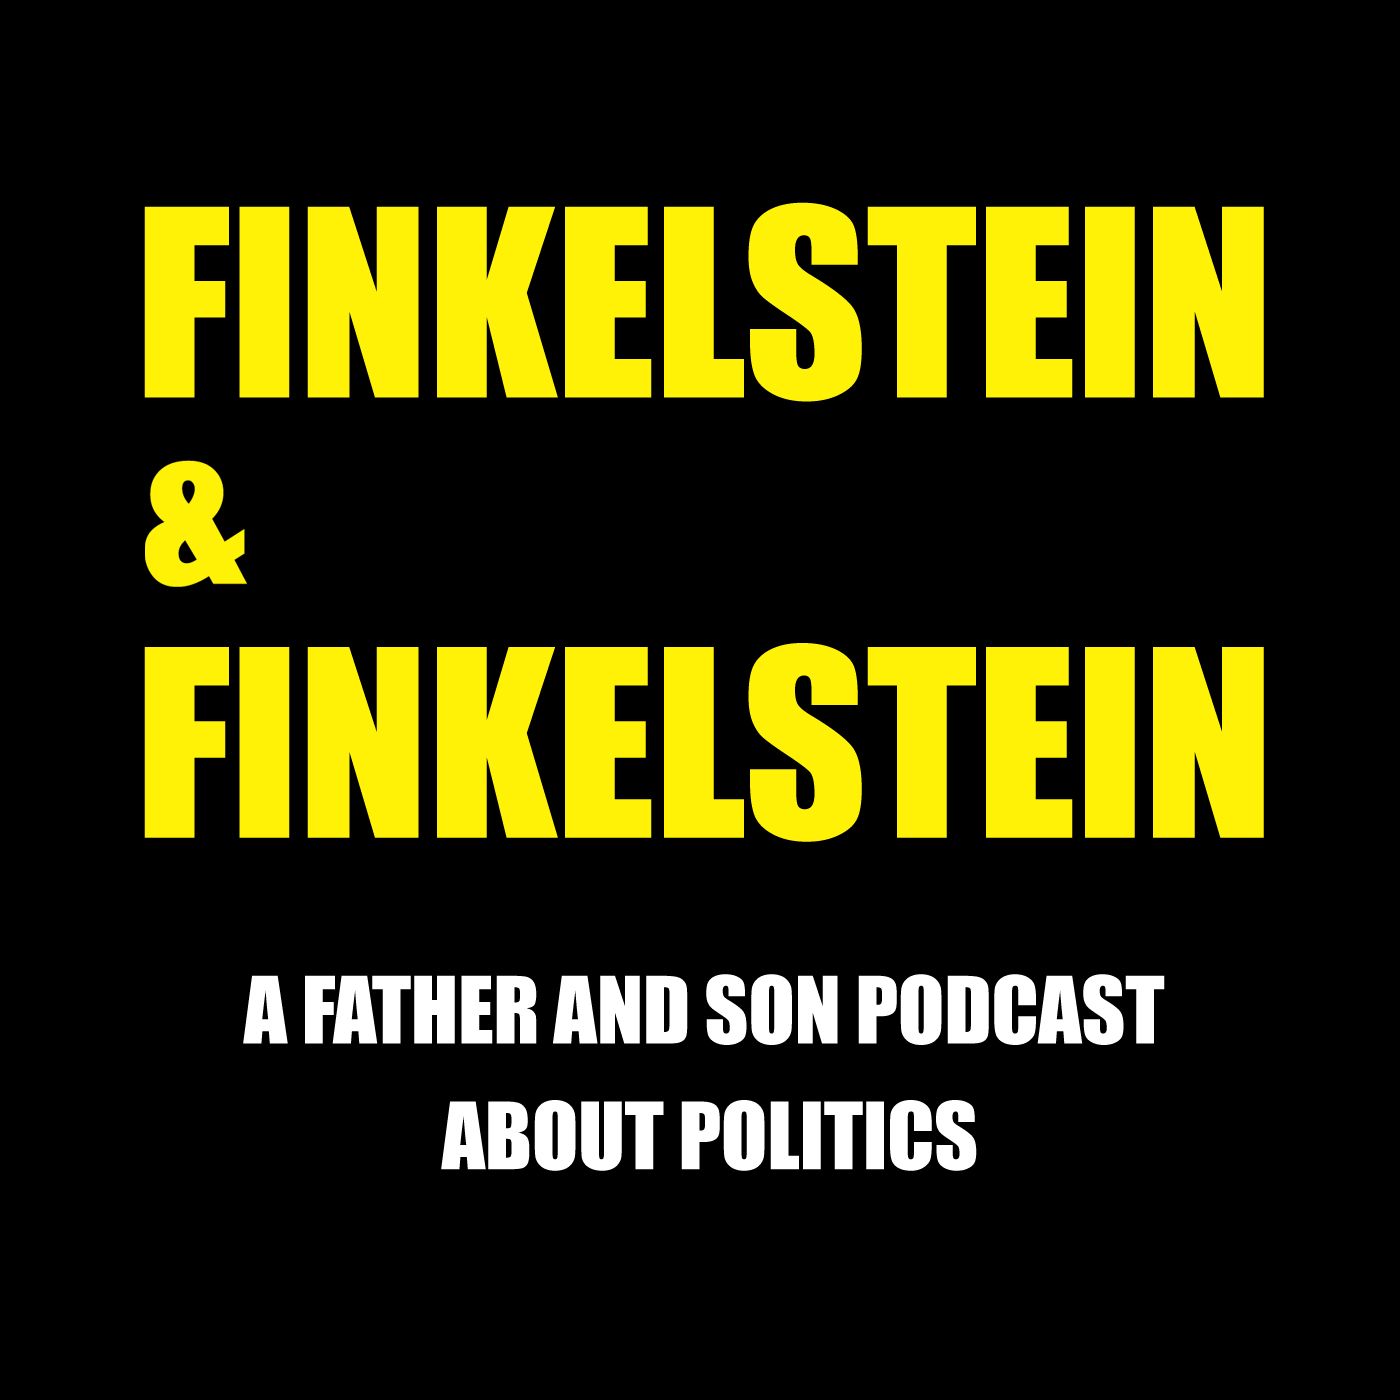 Finkelstein & Finkelstein